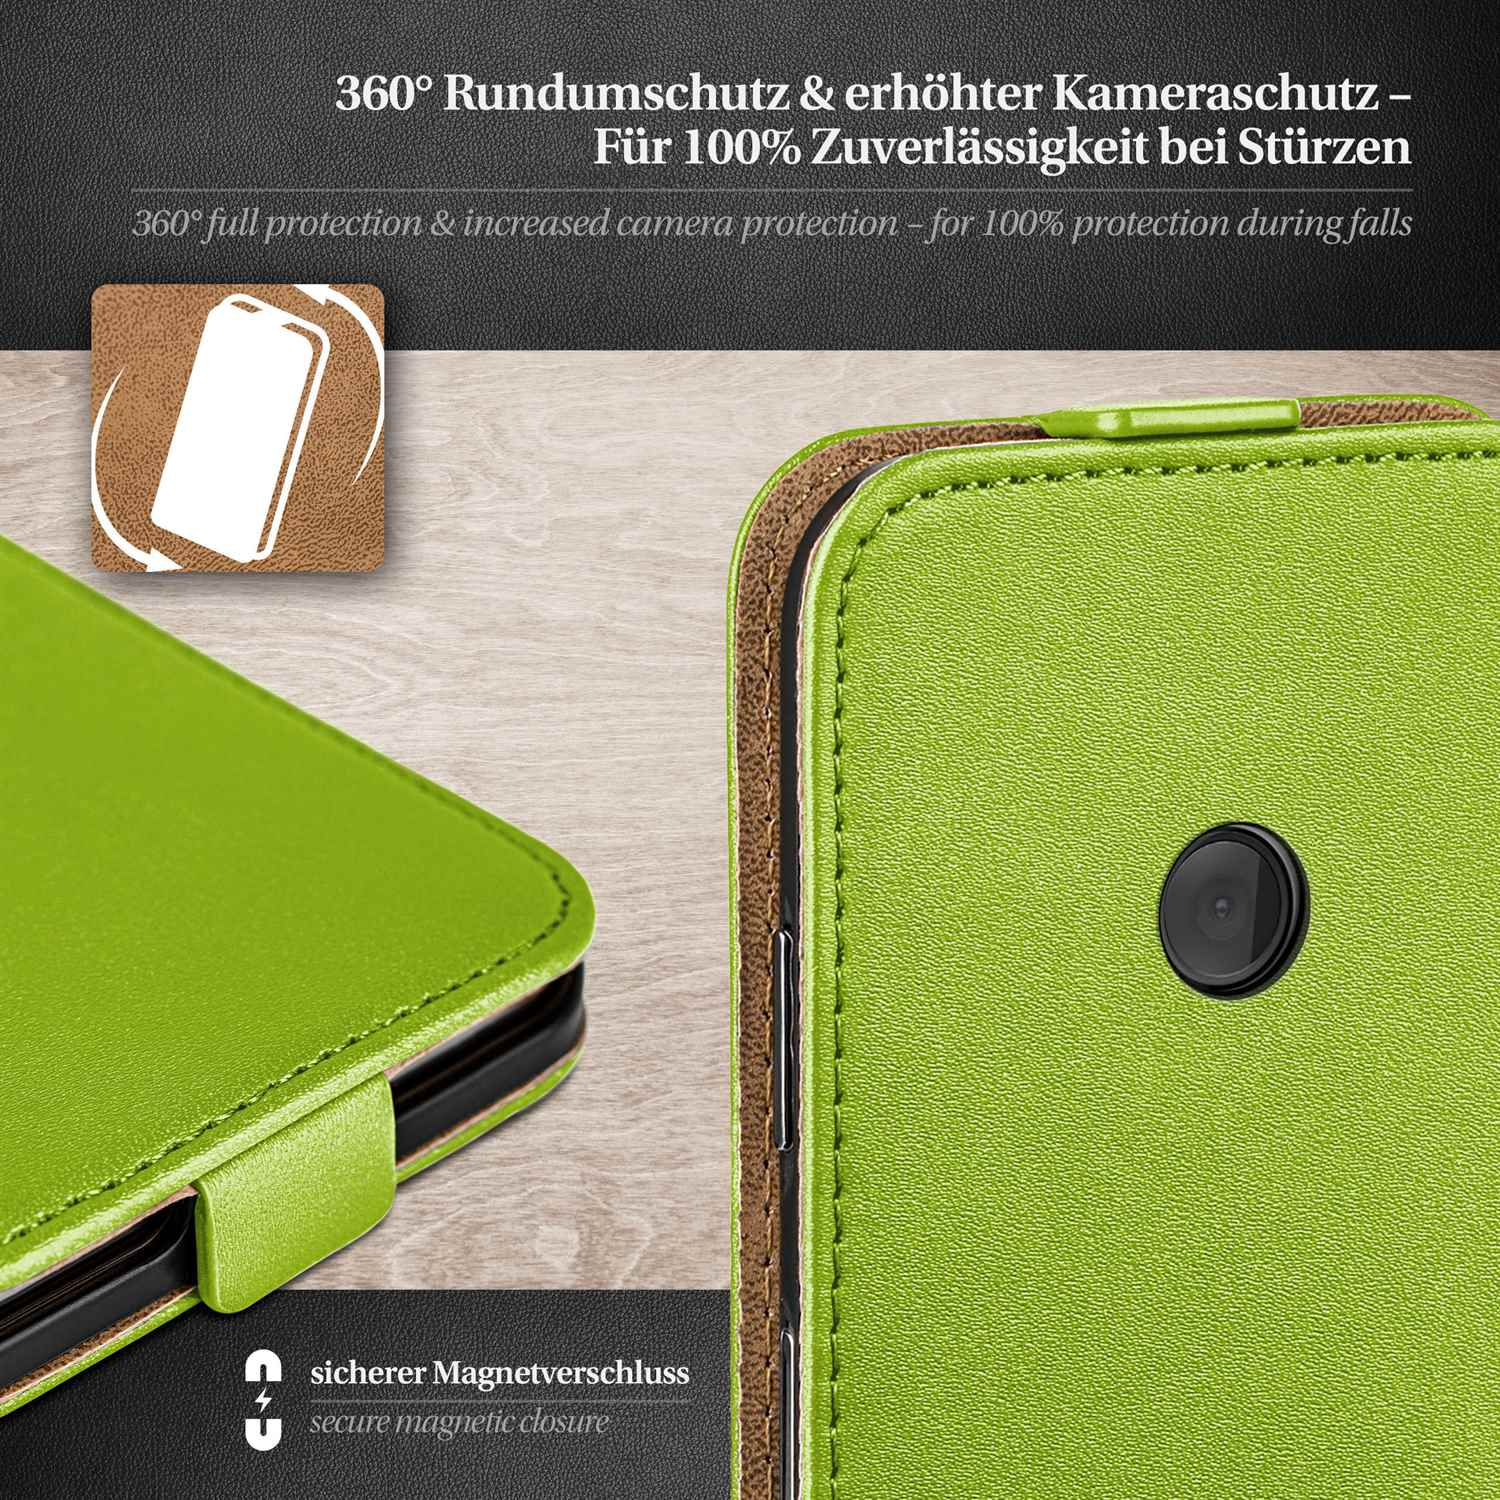 MOEX 525, Nokia, Lumia Cover, Flip Case, Lime-Green Flip